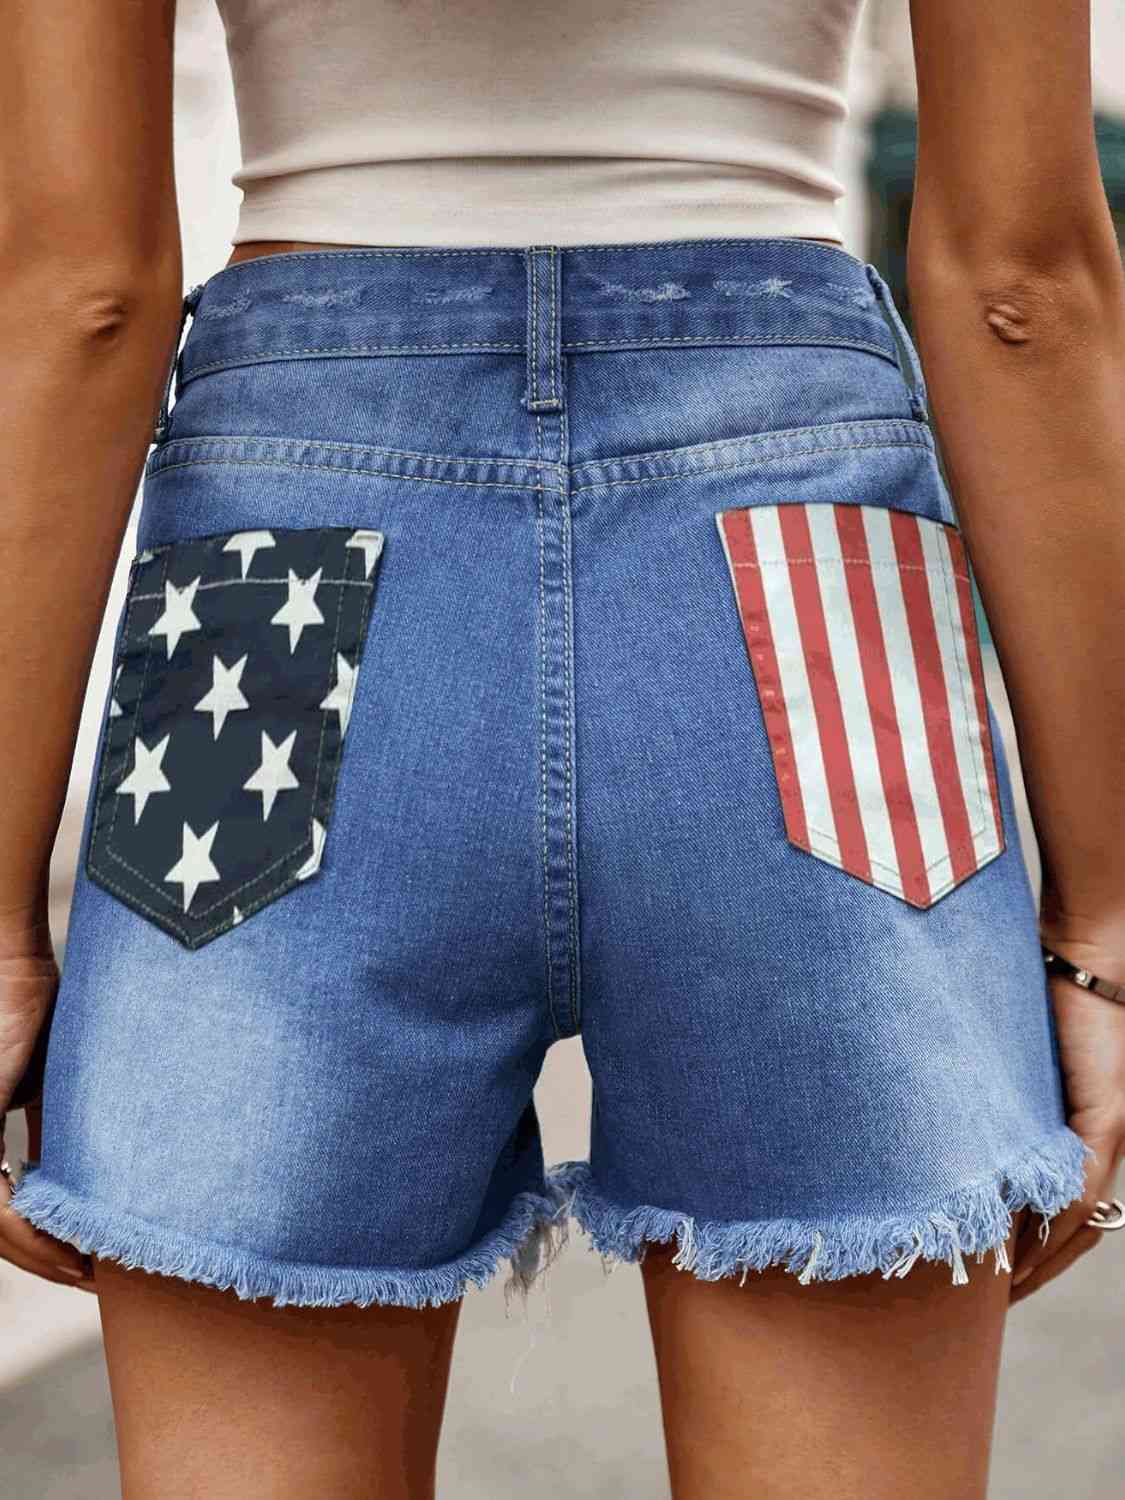 USA Raw Hem Denim Shorts with Pockets Medium S 